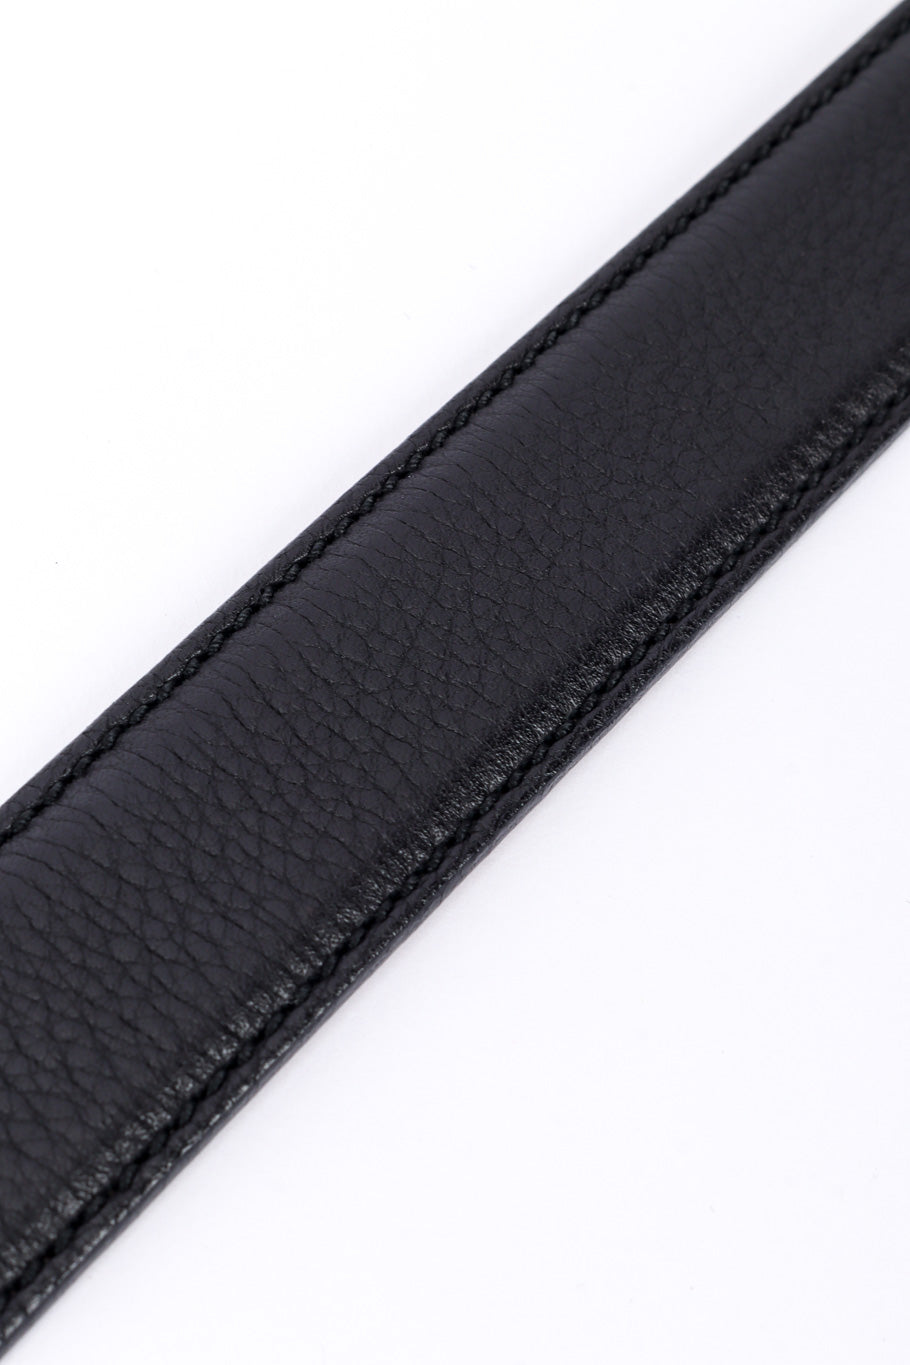 Gucci Horsebit Tassel Belt leather closeup @recessla